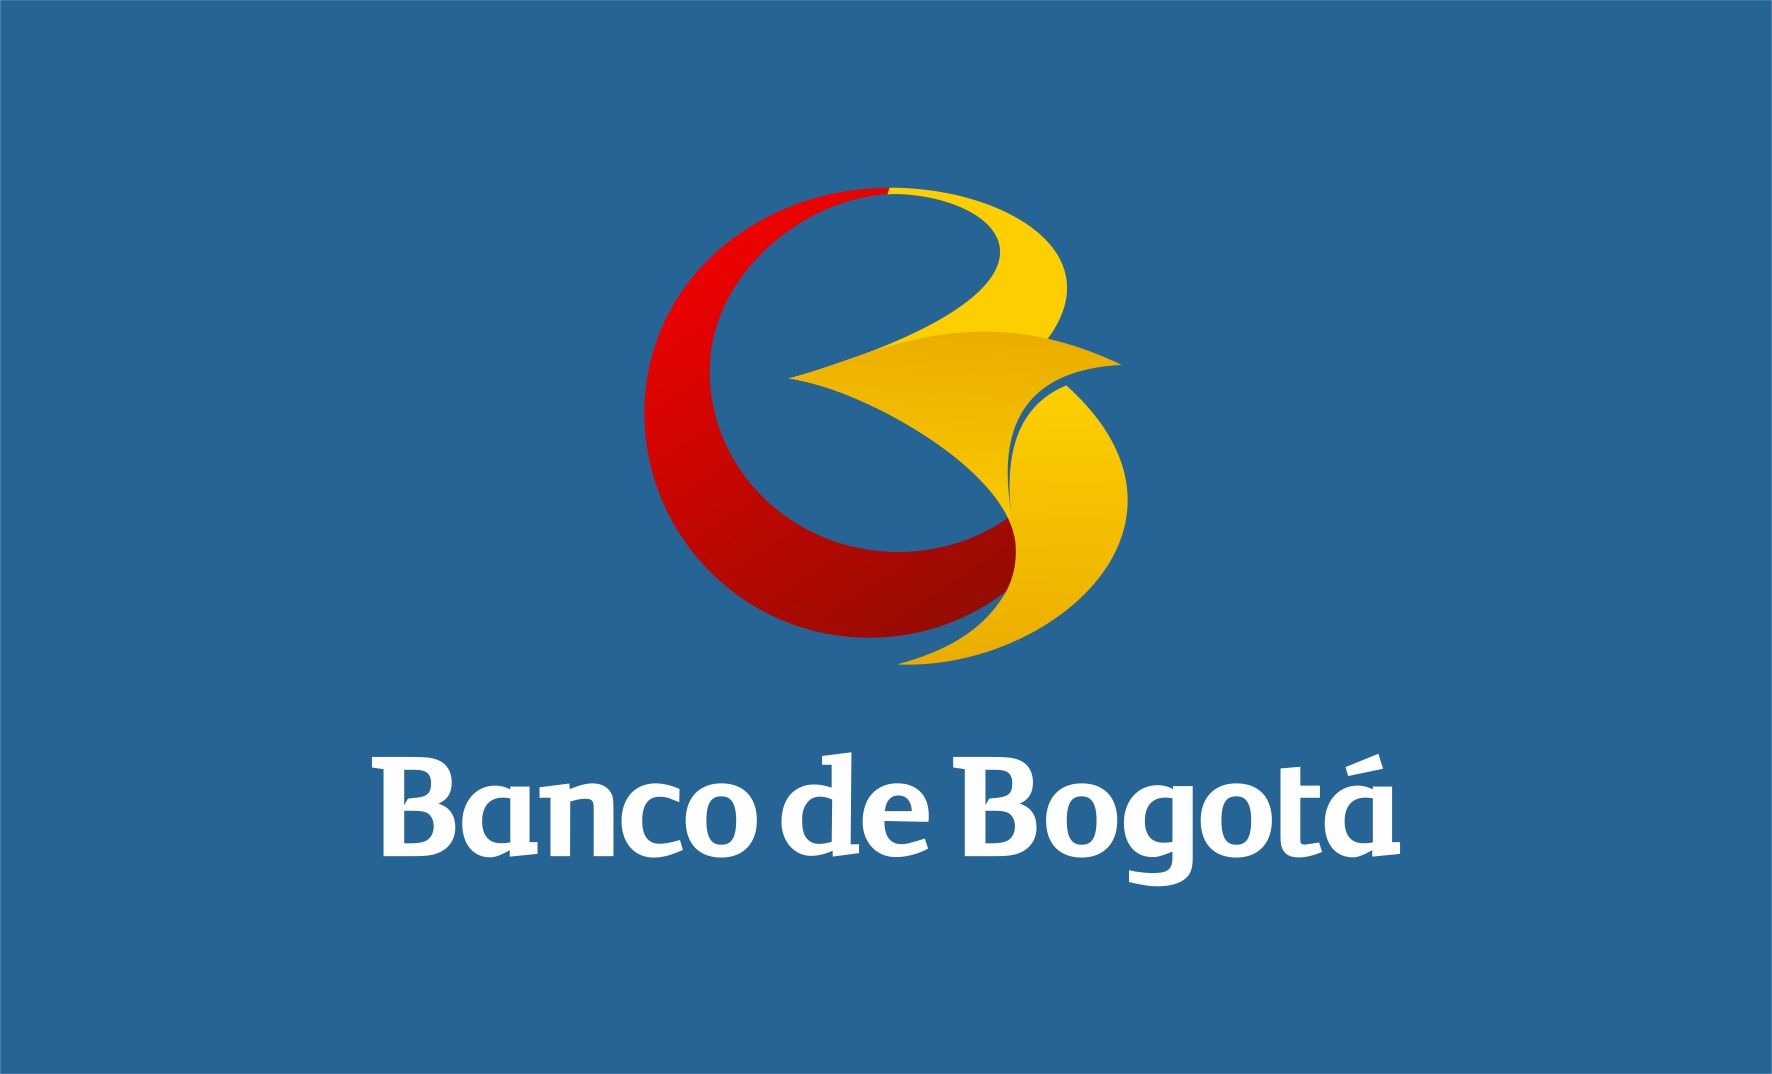 Banco de Bogotá Brand Logo